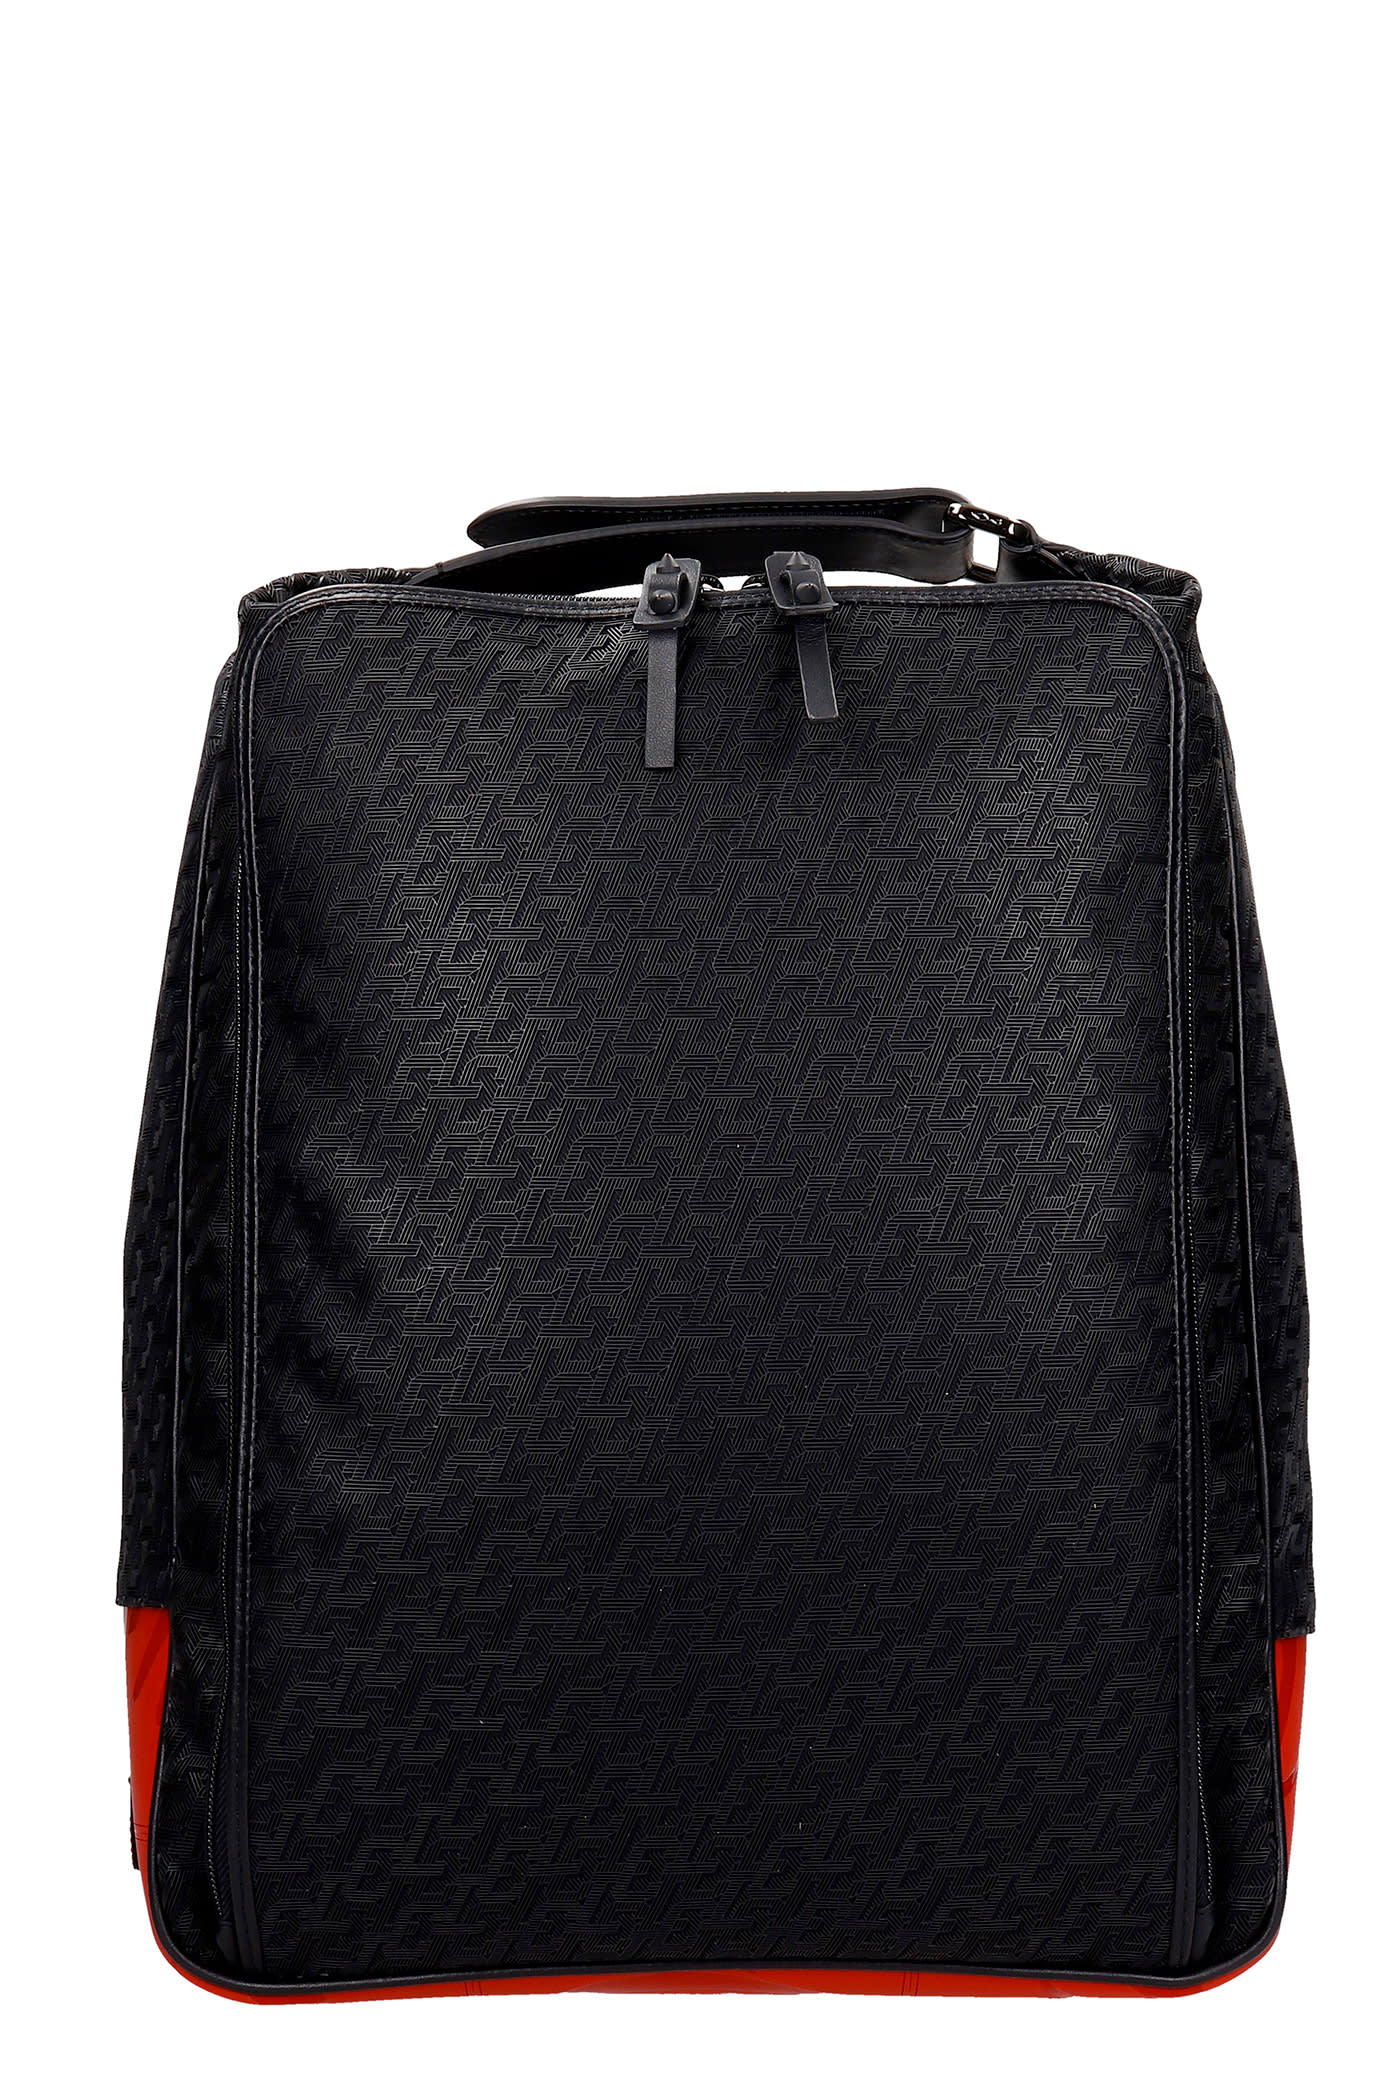 Christian Louboutin Hop N Zip Backpack In Black Synthetic Fibers